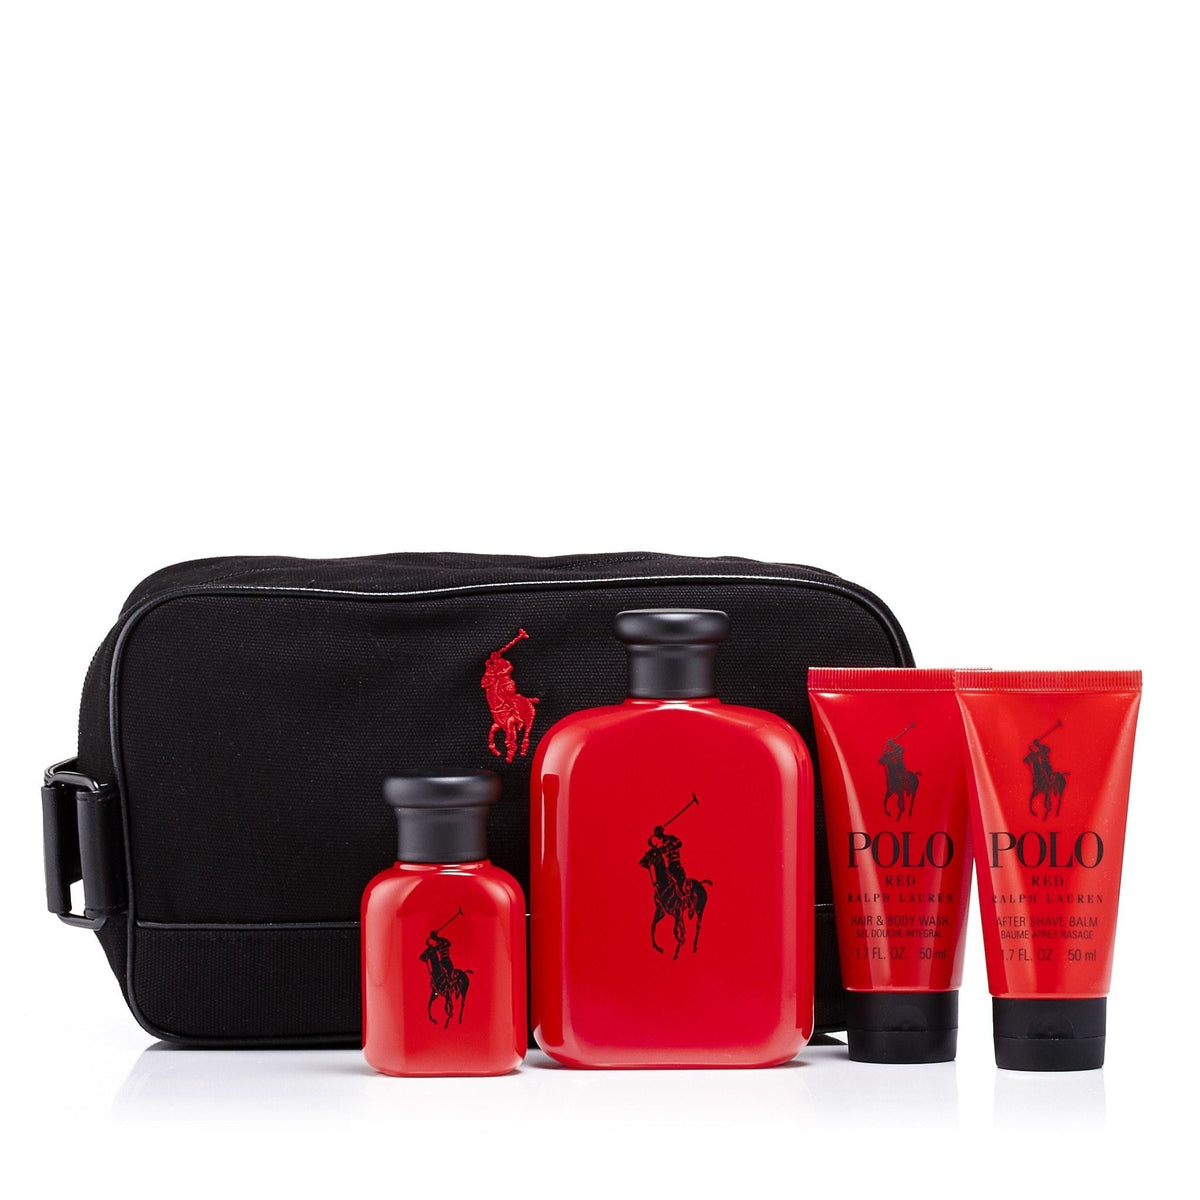 Polo Red Gift Set and Dopp Kit Bag for Men by Ralph Lauren